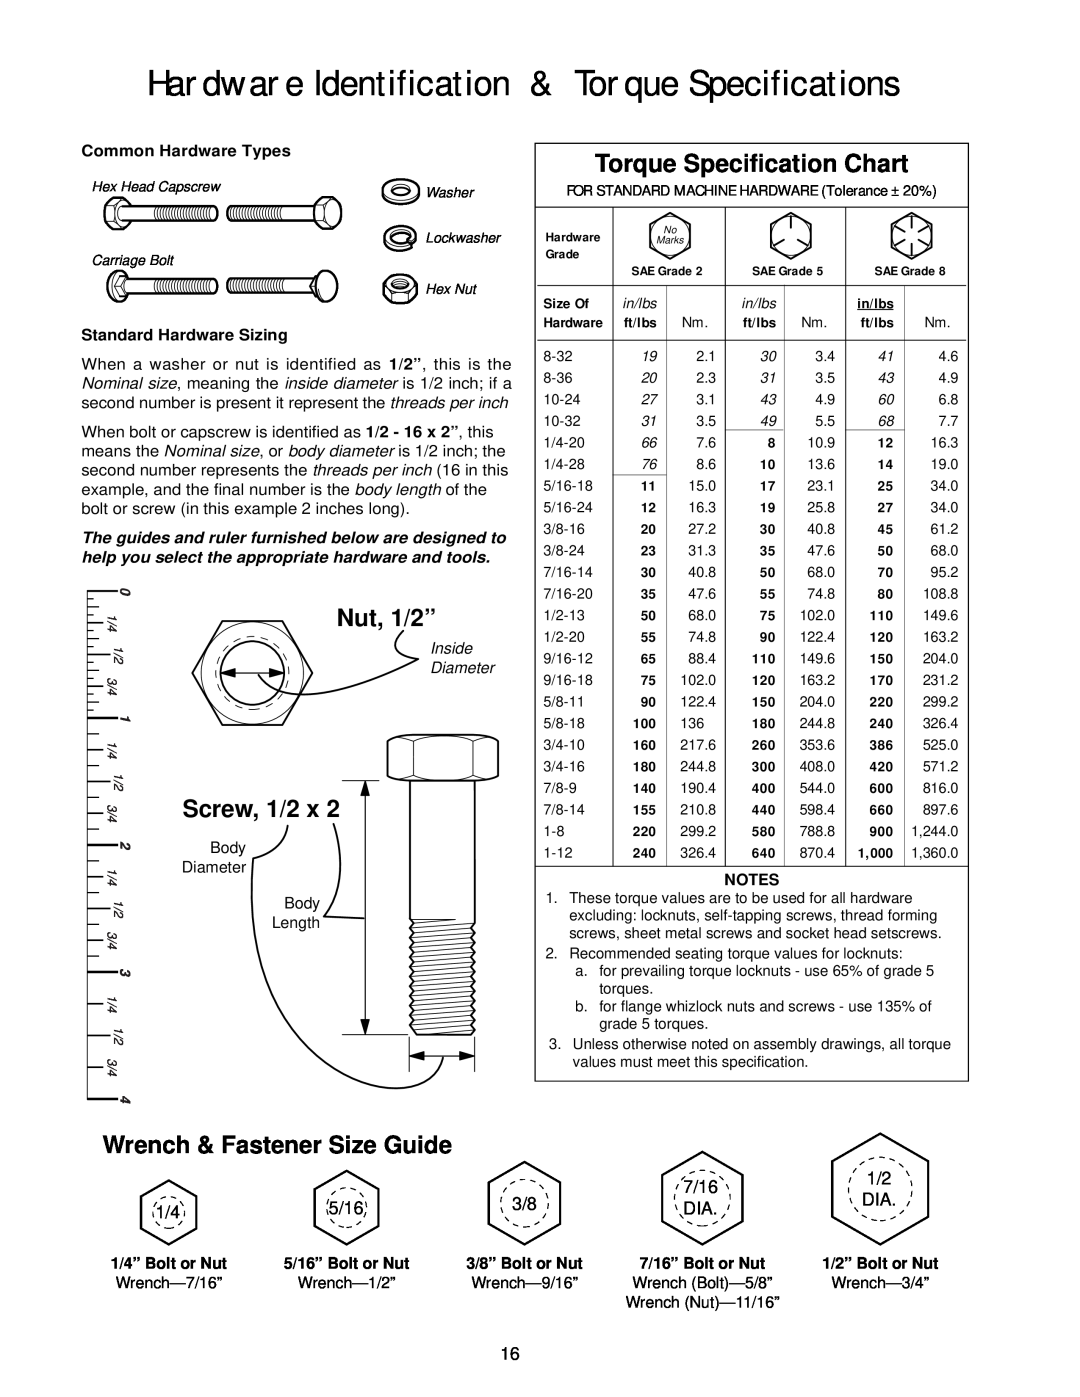 Simplicity 1692039 Hardware Identification & Torque Specifications, Torque Specification Chart, Nut, 1/2”, Screw, 1/2 